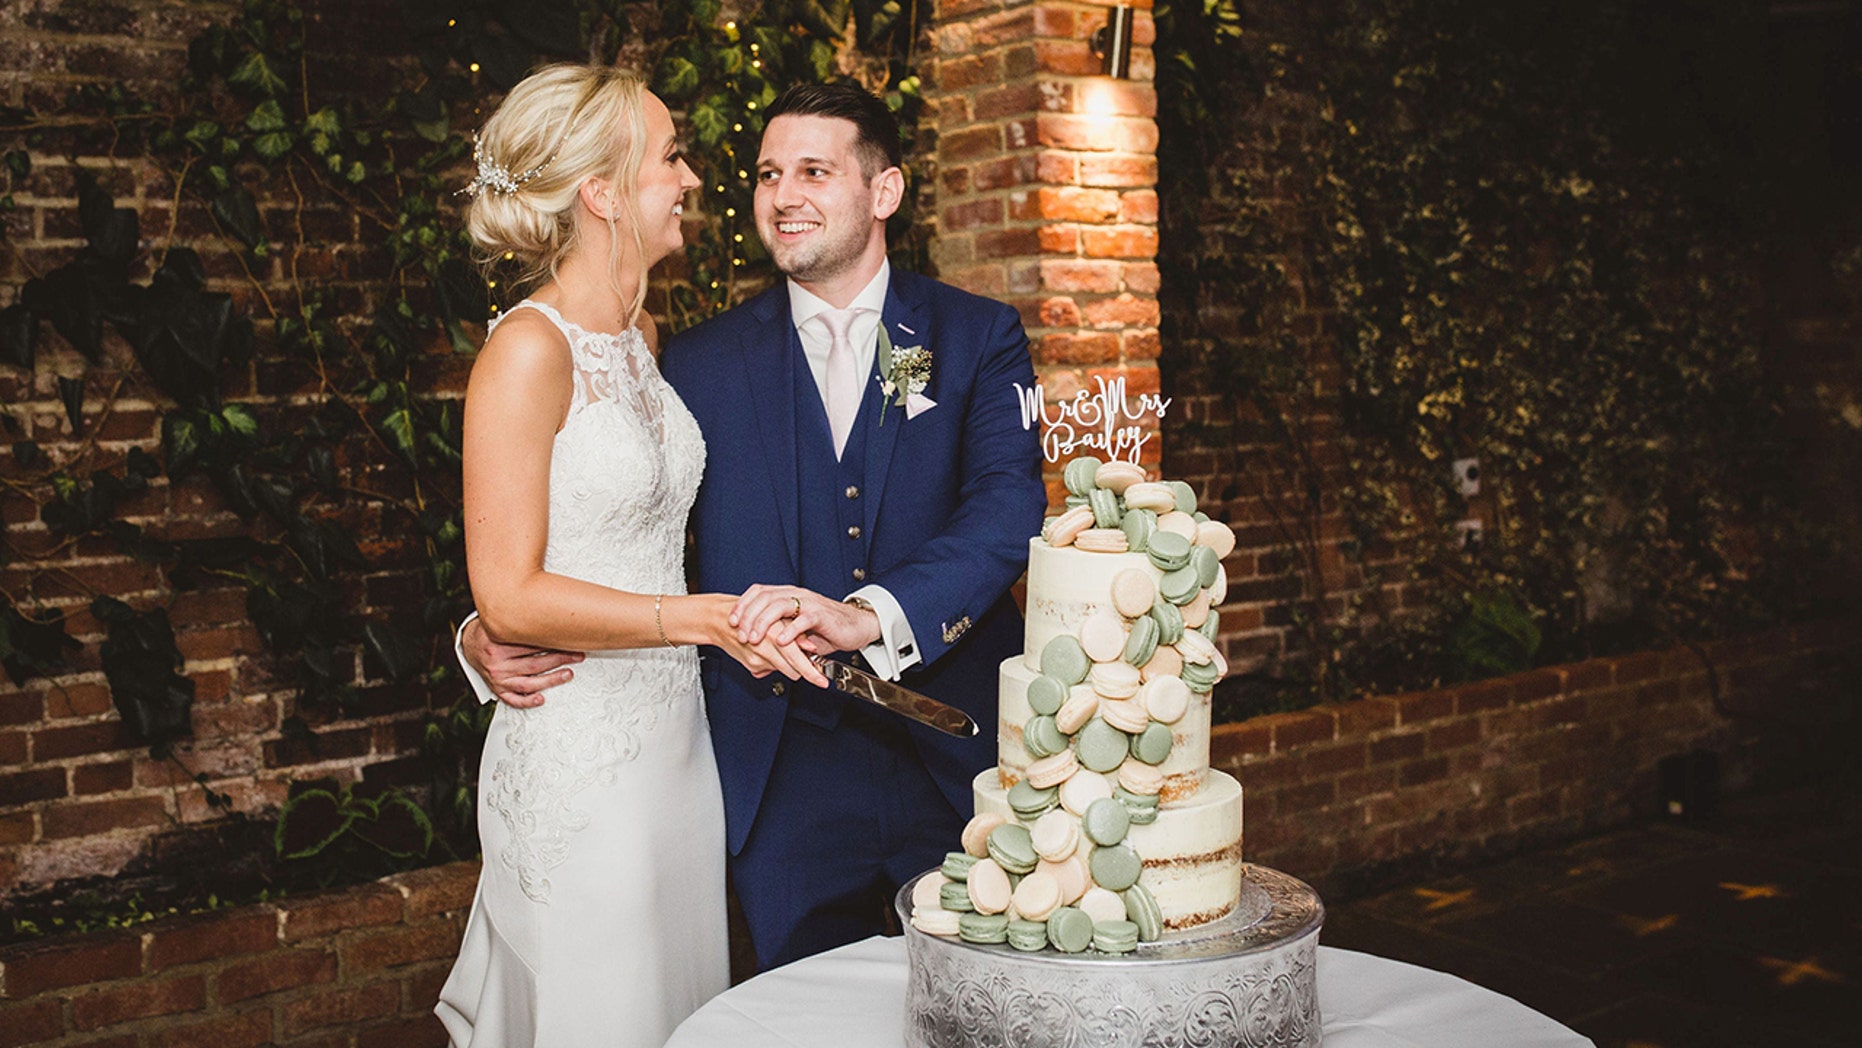 Exact moment of couple's wedding cake disaster caught on camera: 'It felt like slow motion' - Fox News